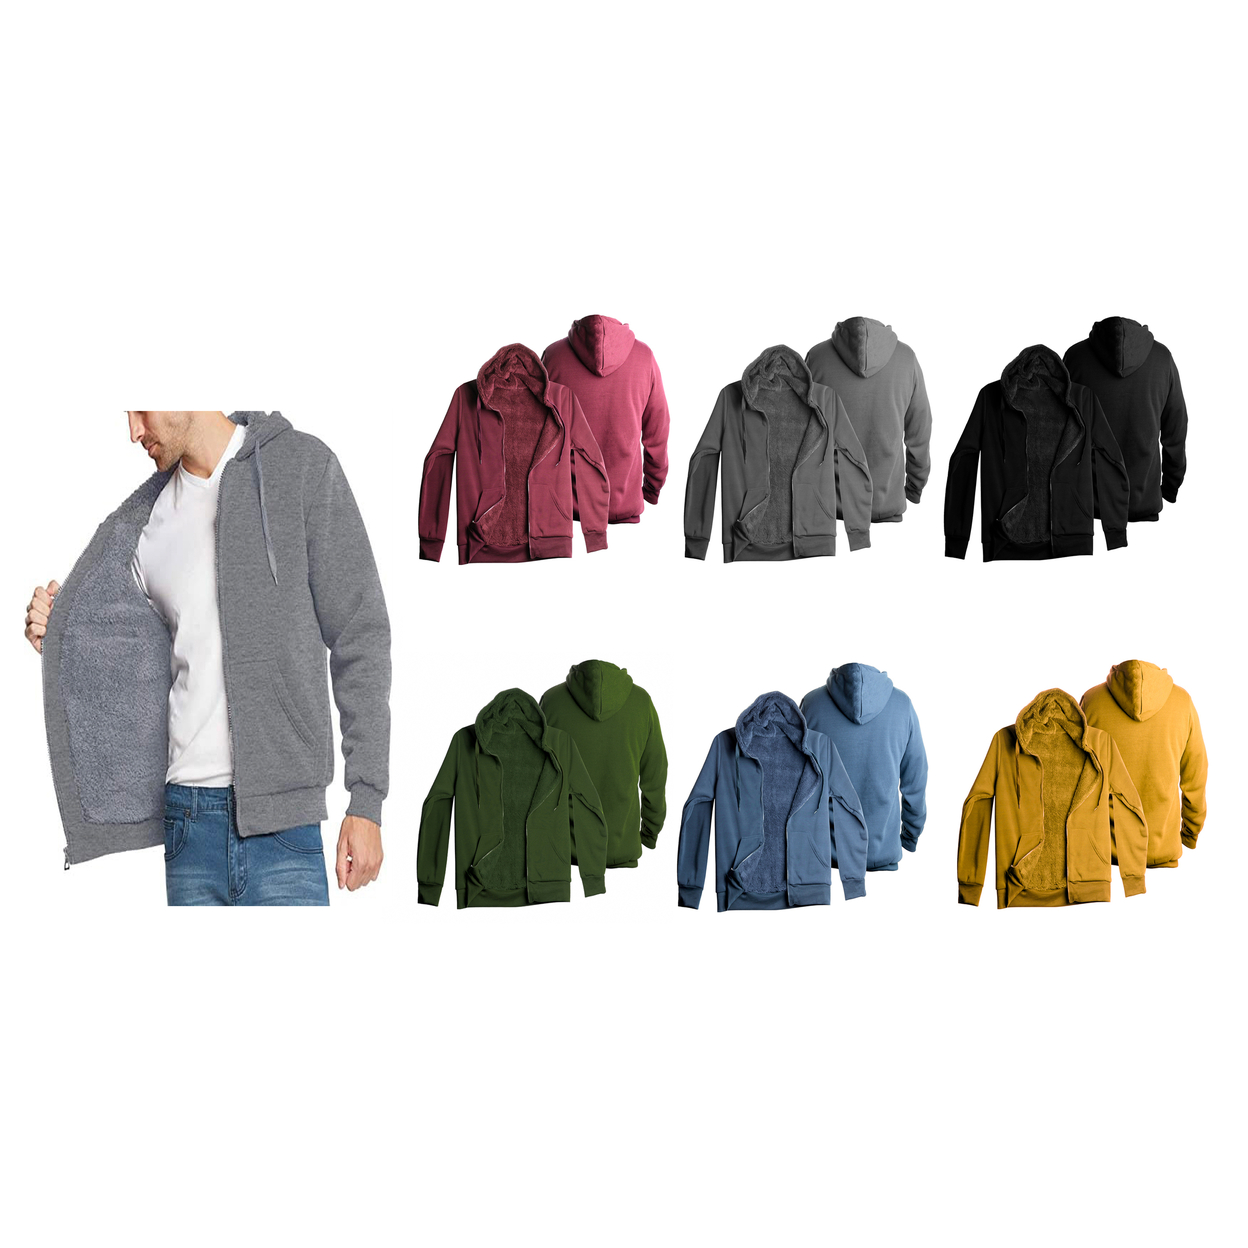 Men's Big & Tall Heavyweight Soft Sherpa Lined Fleece Zip-Up Hoodie Sweater Jacket - Olive, Xx-large